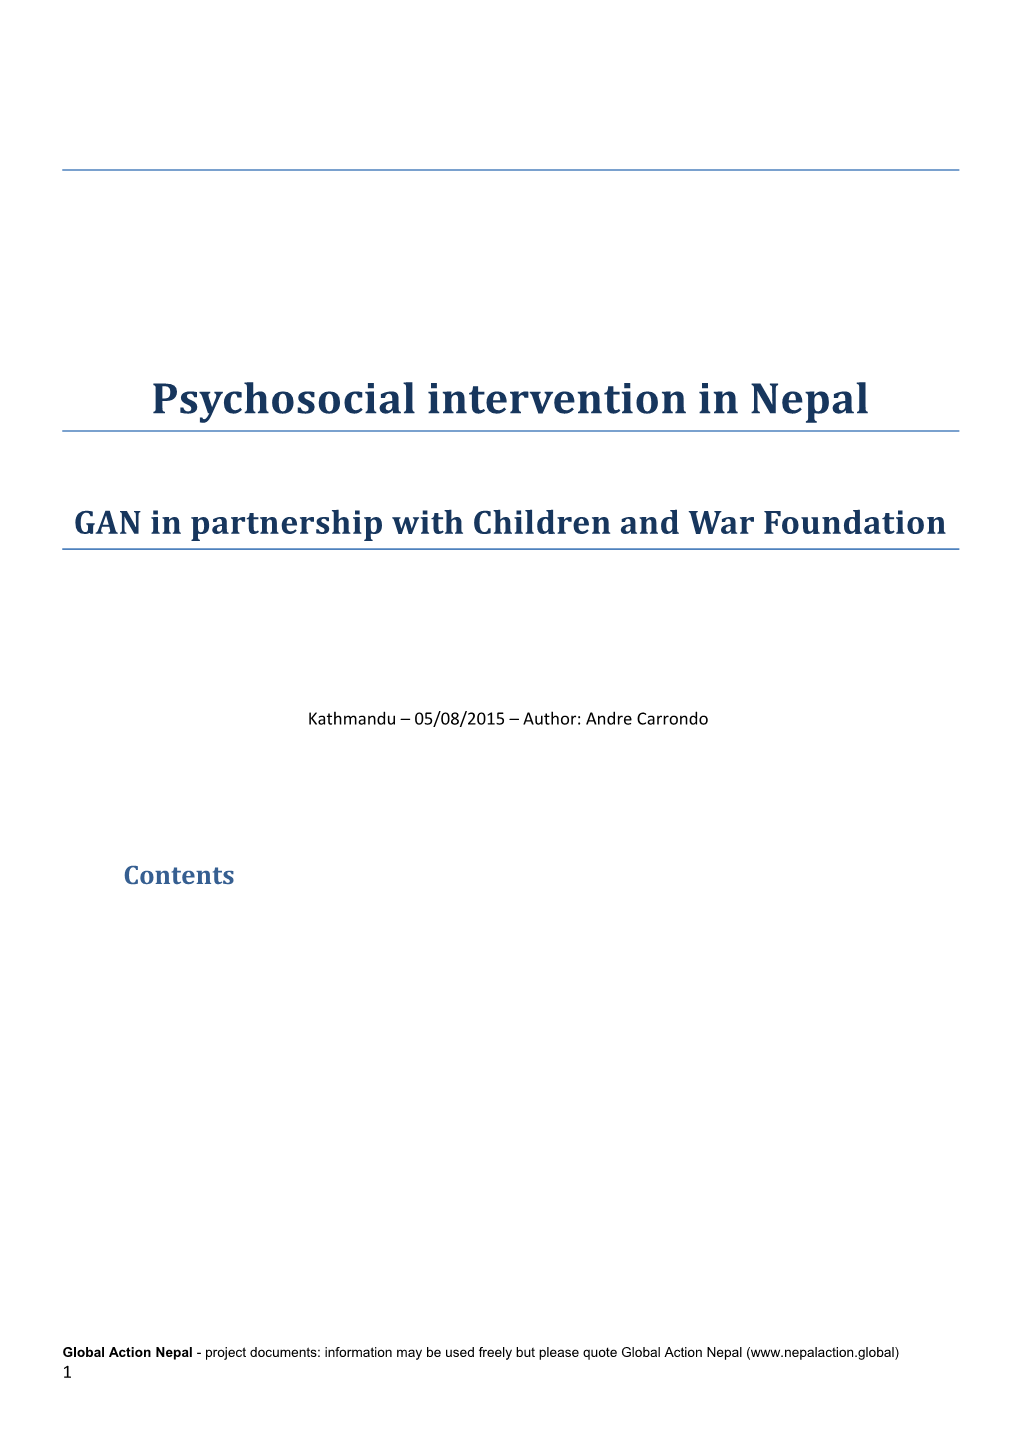 GAN in Partnership Withchildren and War Foundation